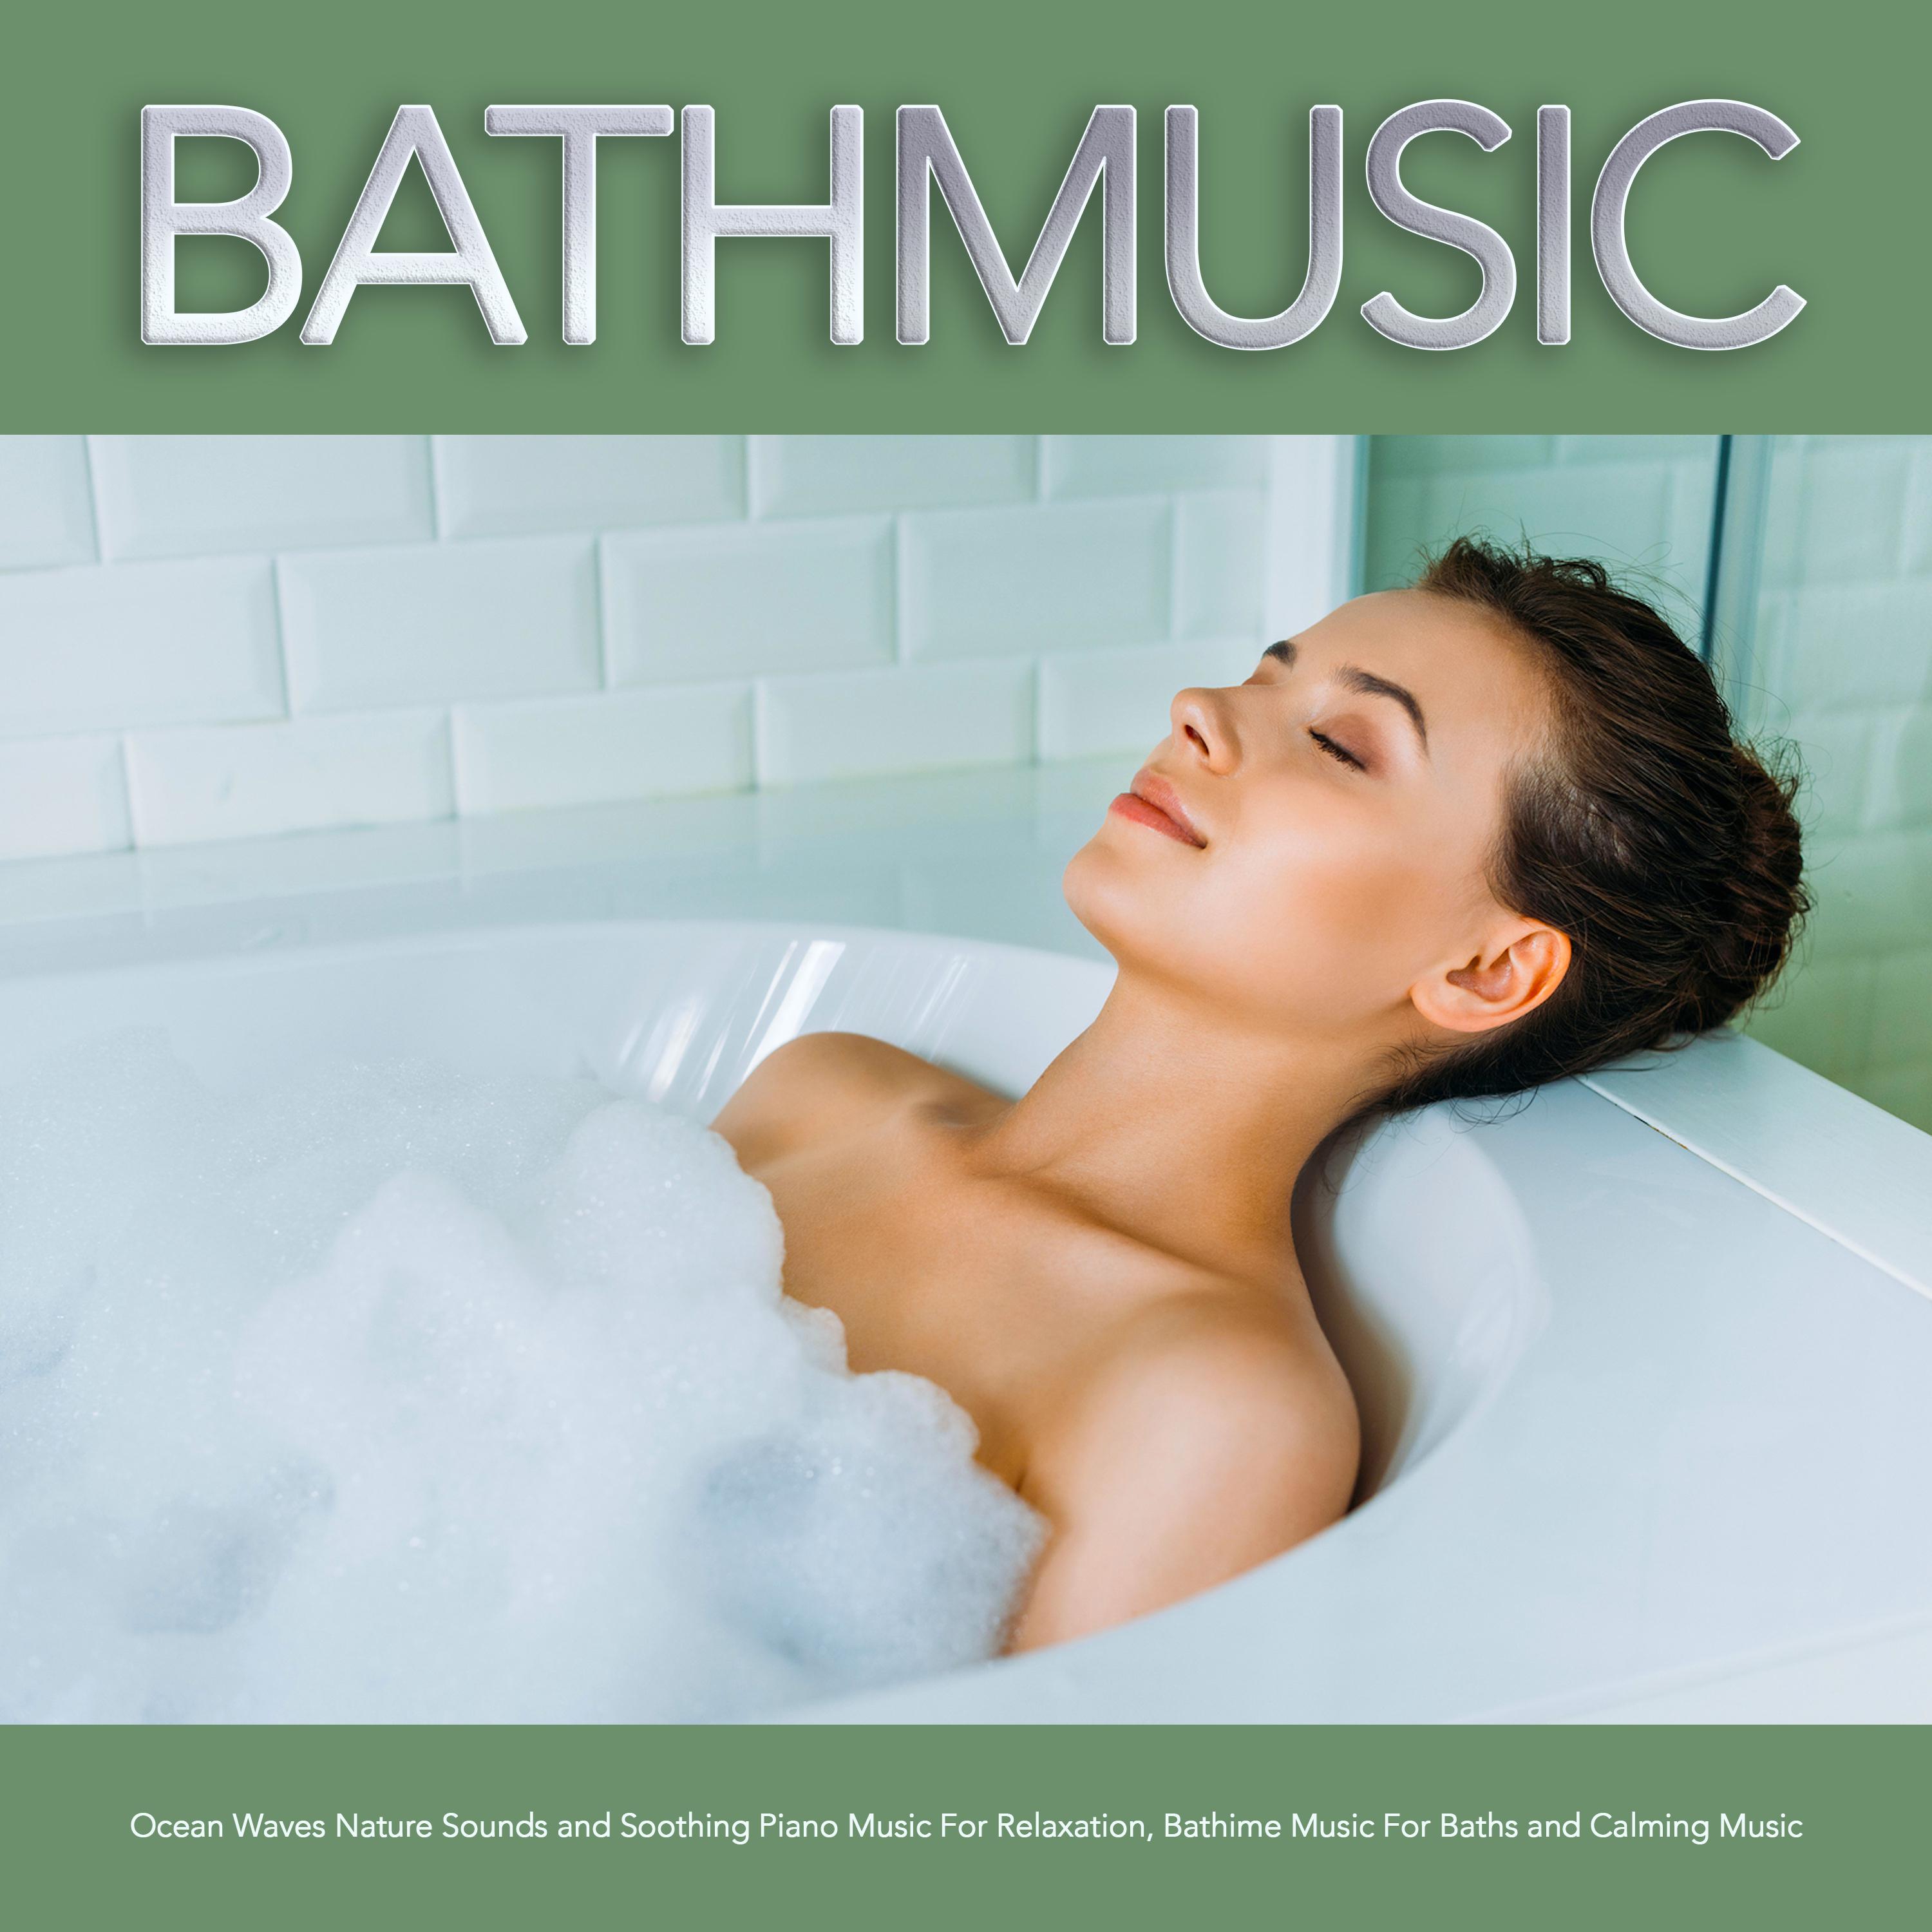 Music For Bathtime